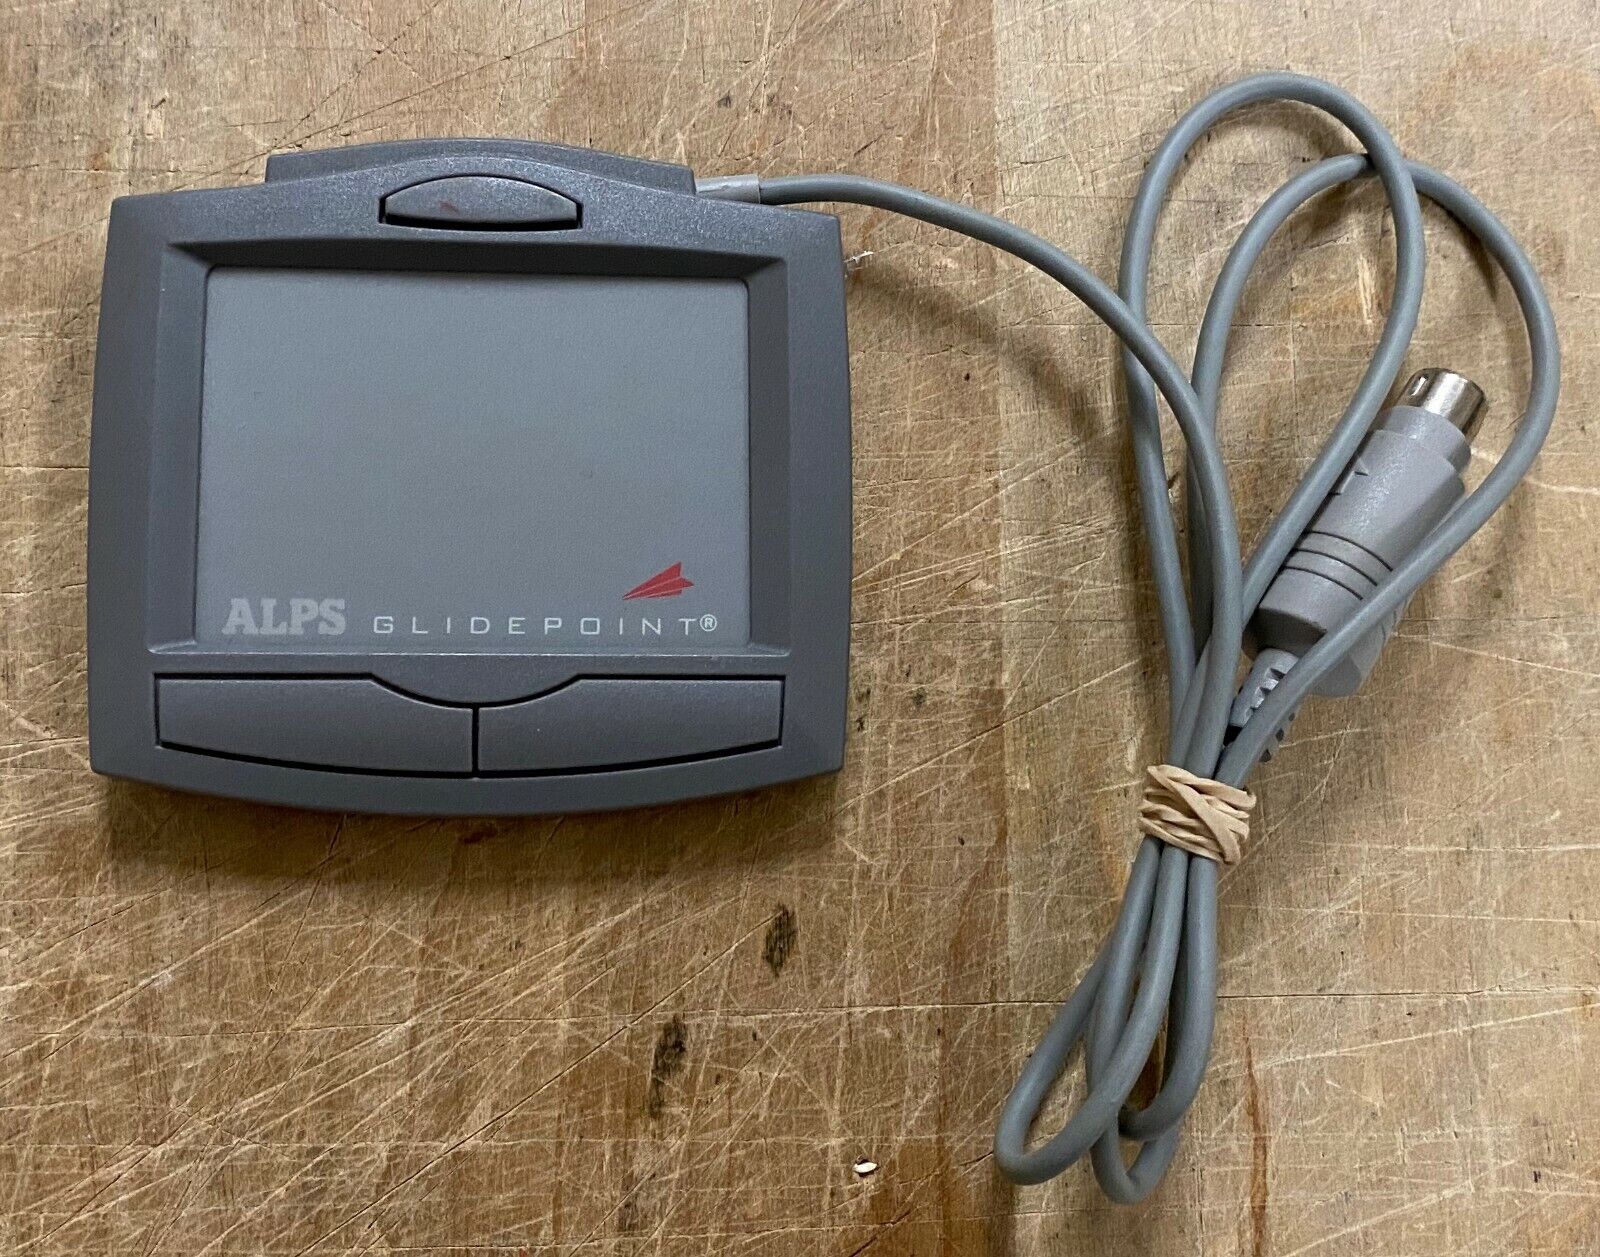 ALPS GlidePoint Apple Compatible Desktop Bus Mouse